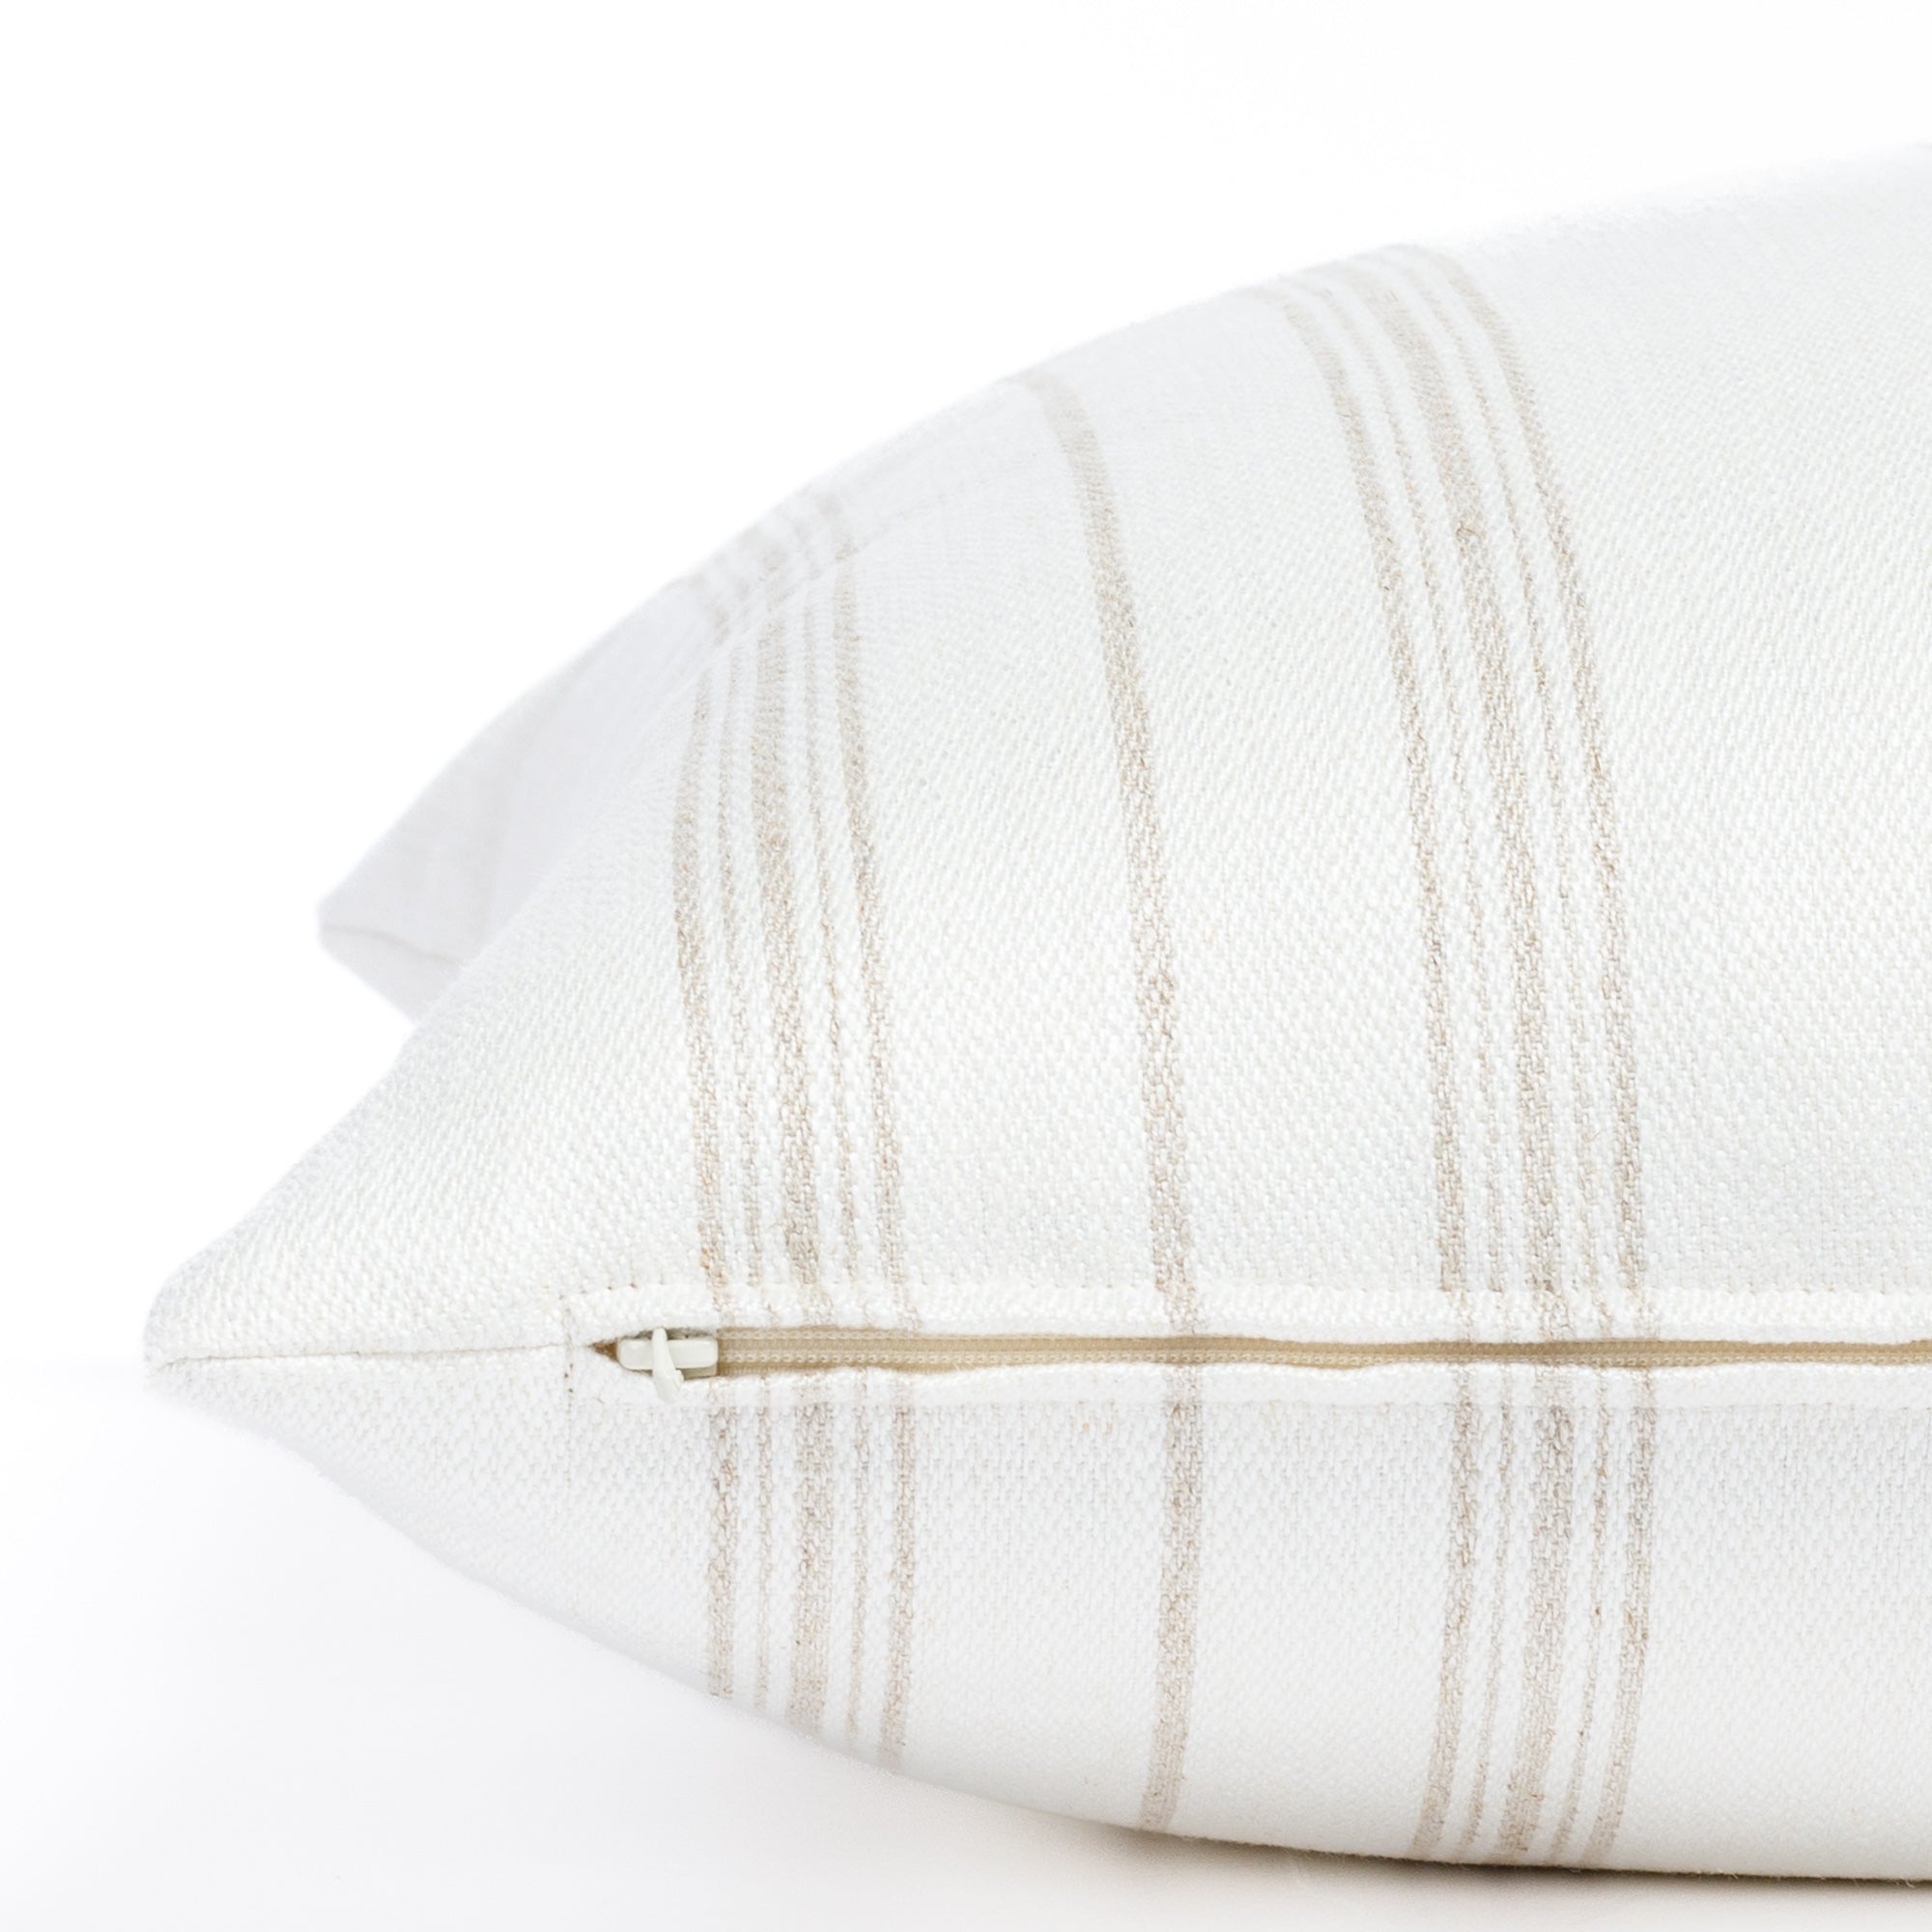 a flax beige and white striped throw pillow : zipper detail